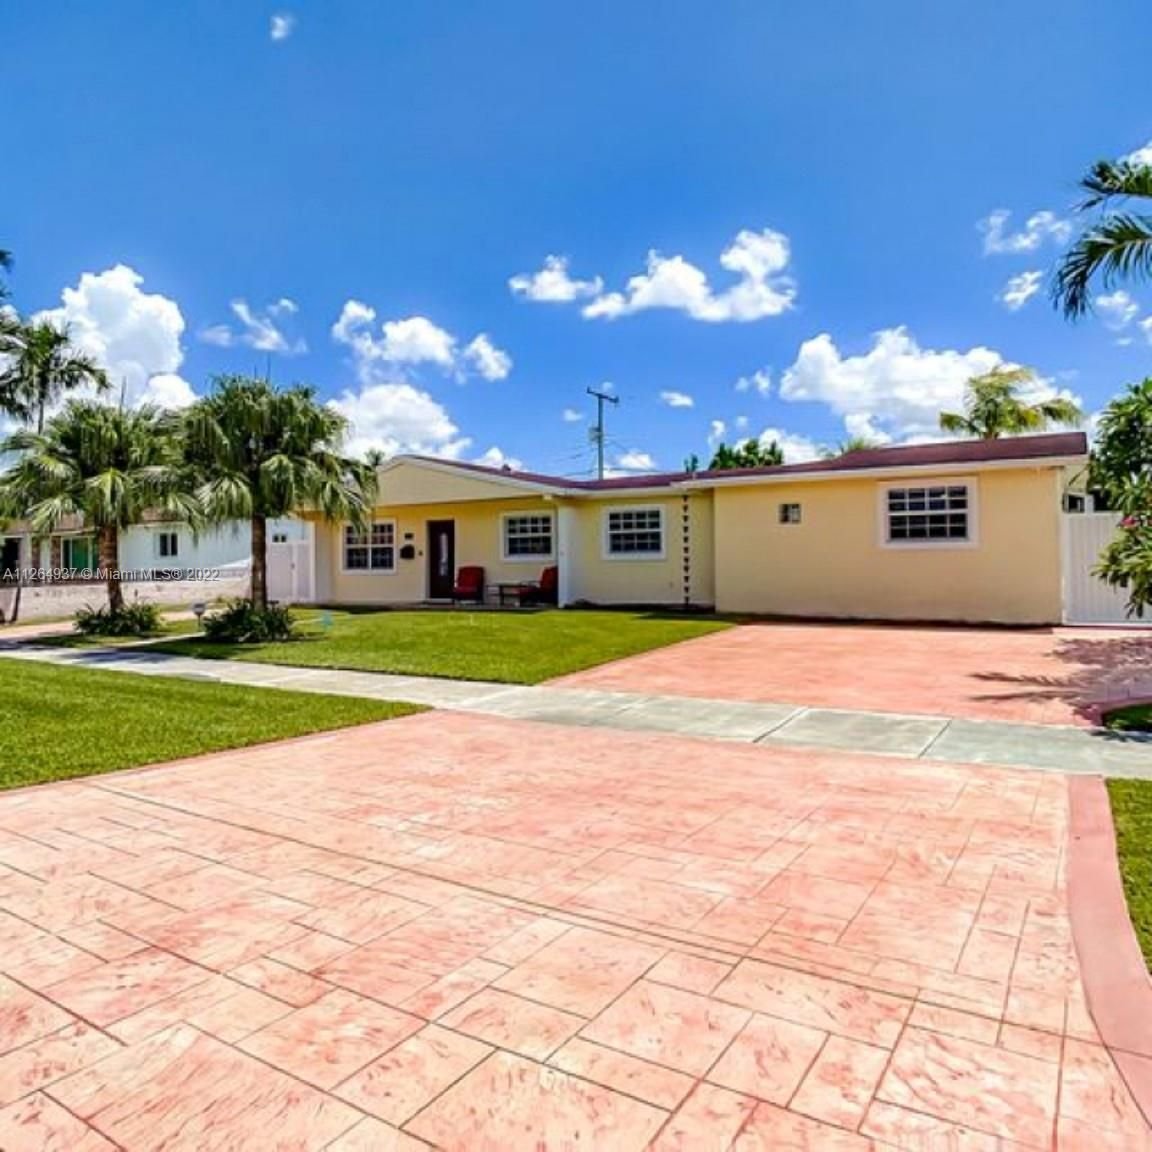 Real estate property located at 11040 64th St, Miami-Dade County, Miami, FL